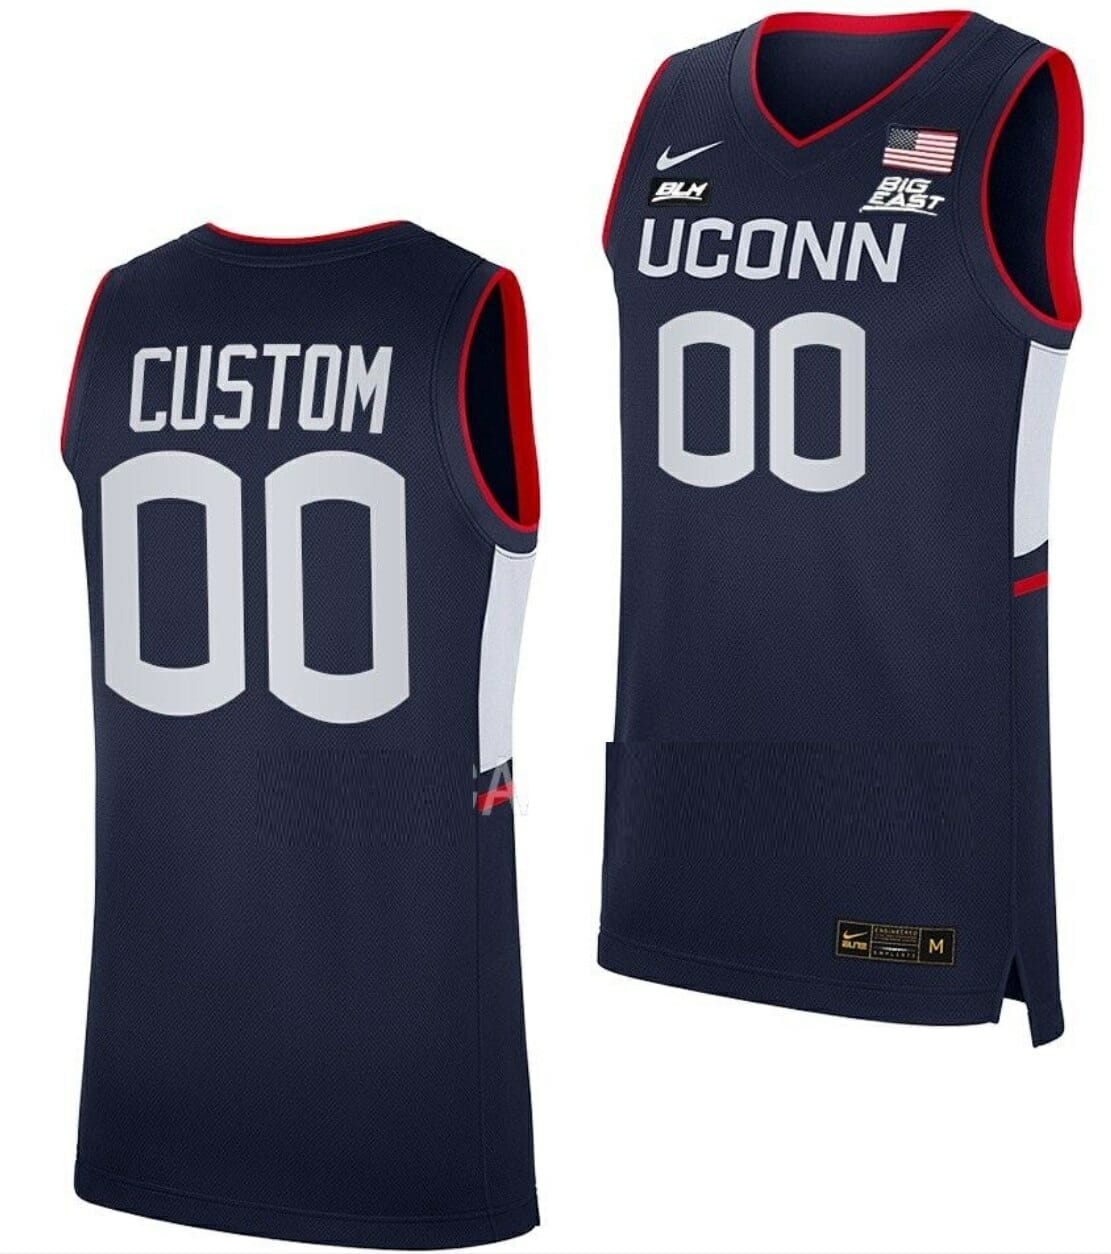 Nike UConn Men's Nike College Basketball Jersey. Nike.com